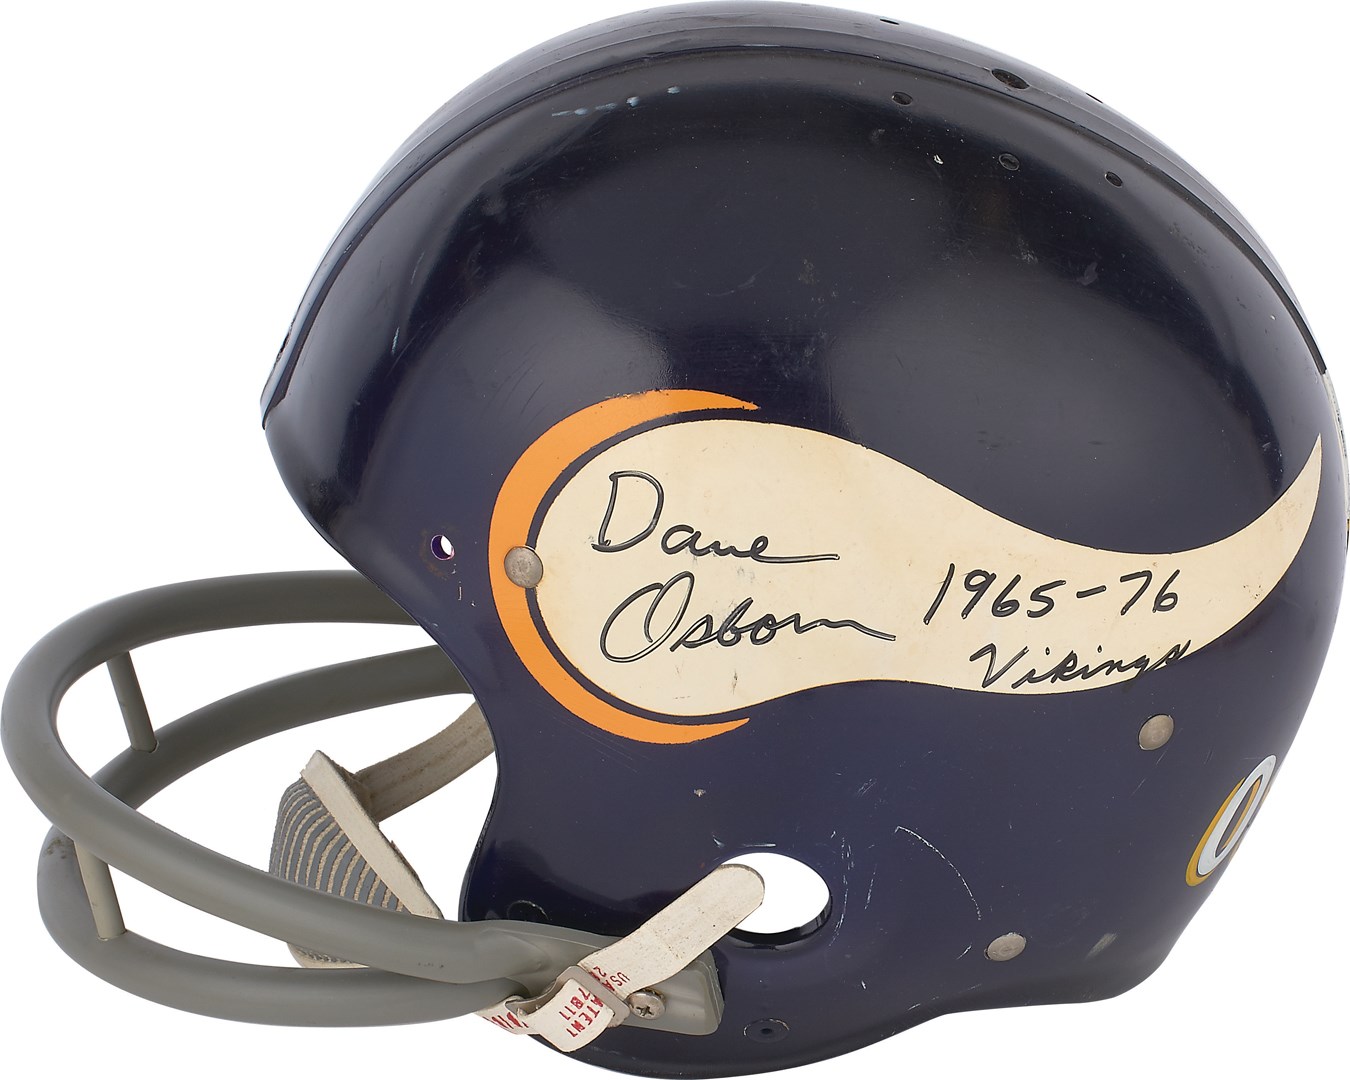 - Dave Osborn Minnesota Vikings Signed Game Worn Helmet (Osborn Letter)